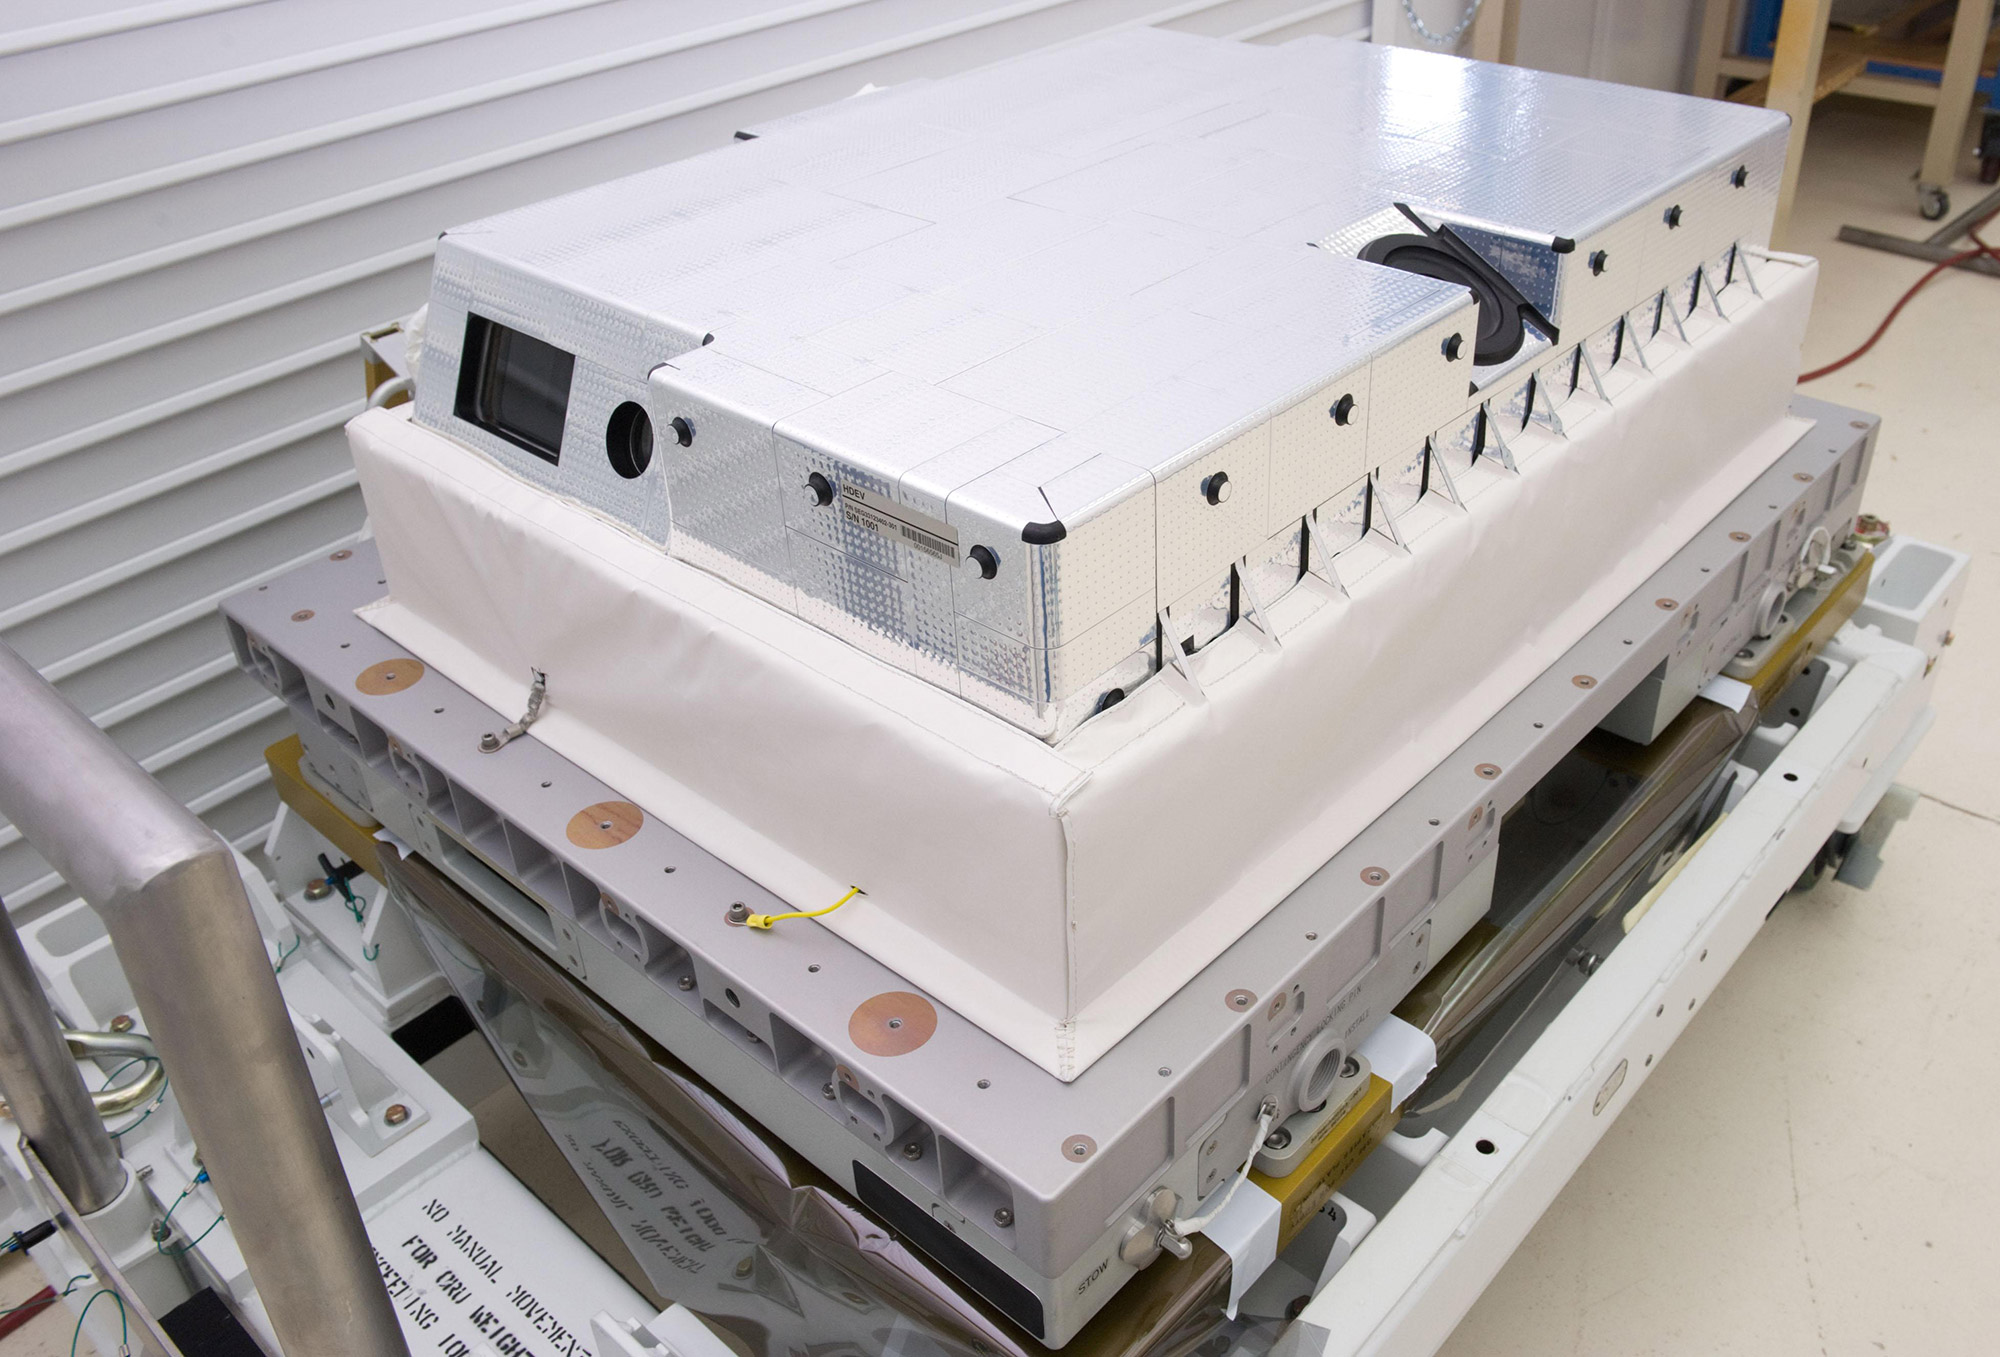 NASA HDEV4 instrument package